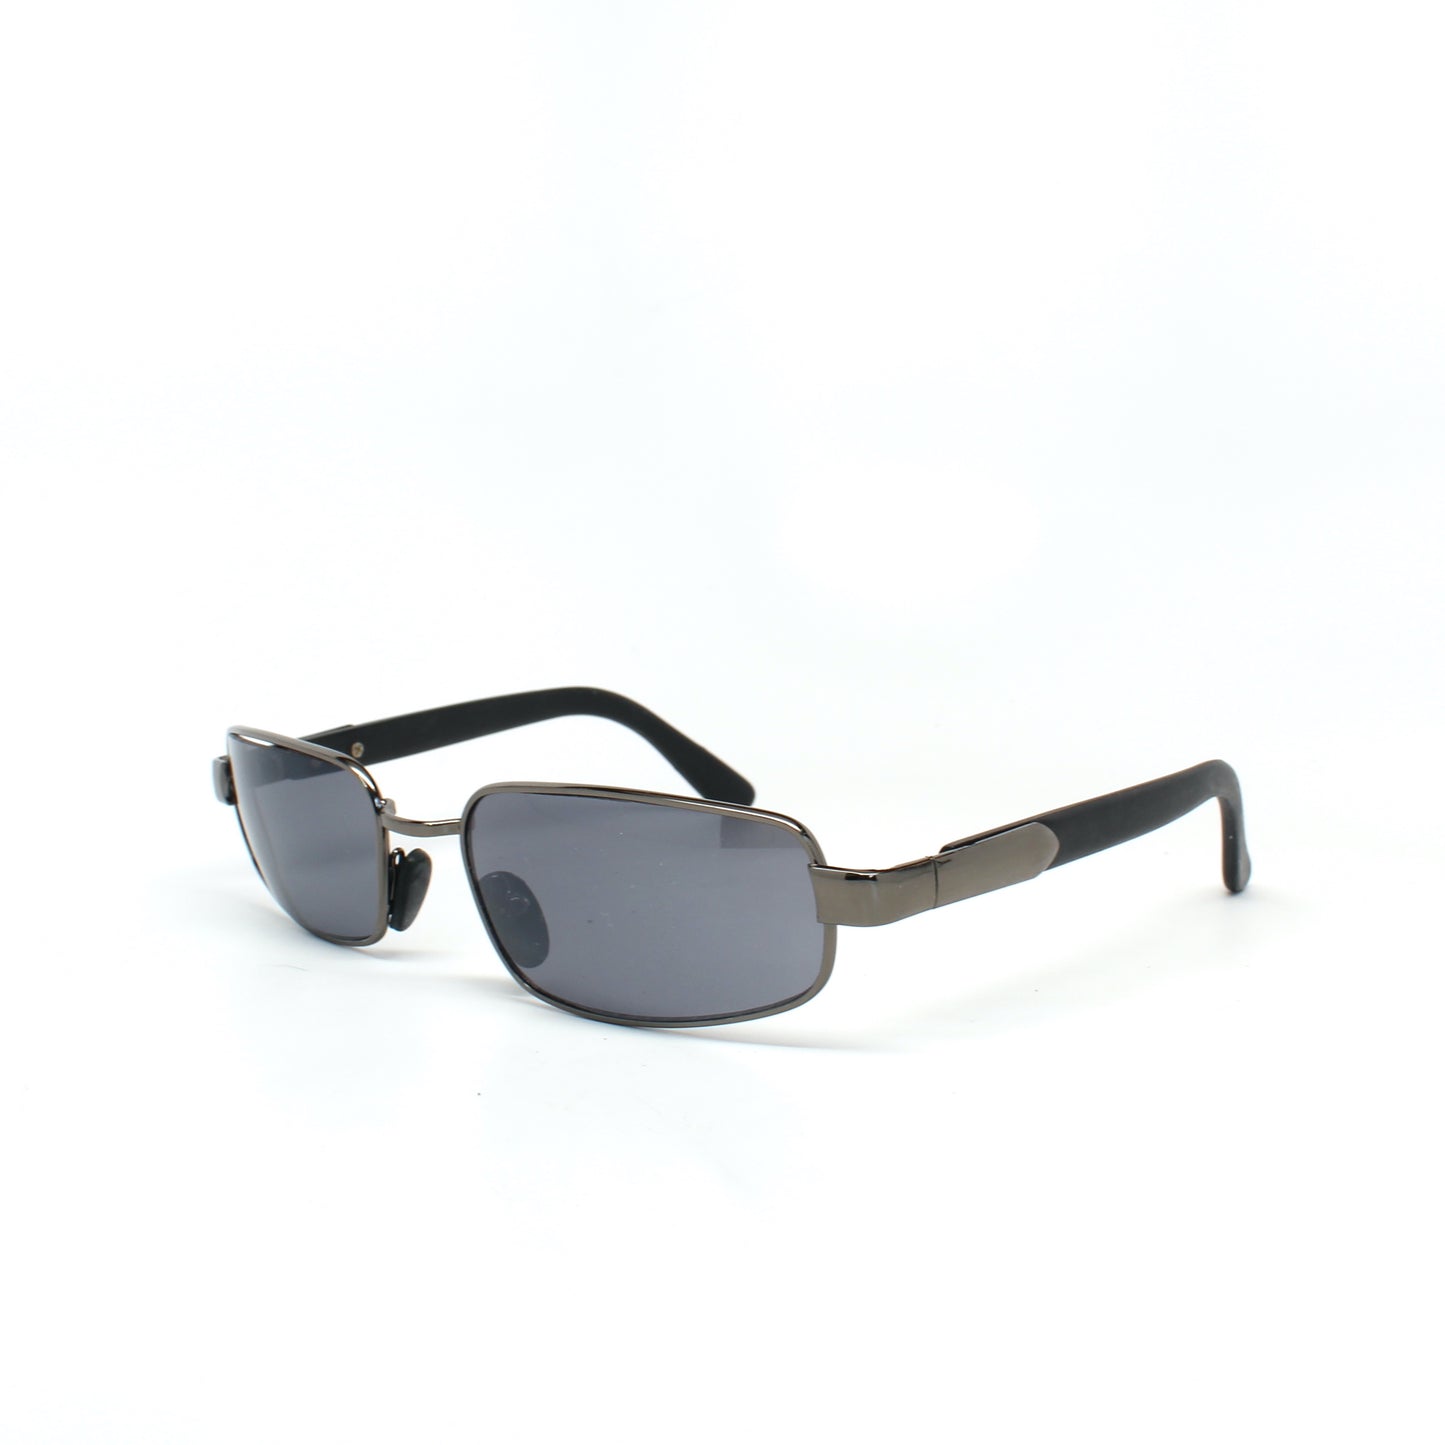 Vintage MINI Small Size 1996 Neo Rectangle Wire Frame Sunglasses - Silver